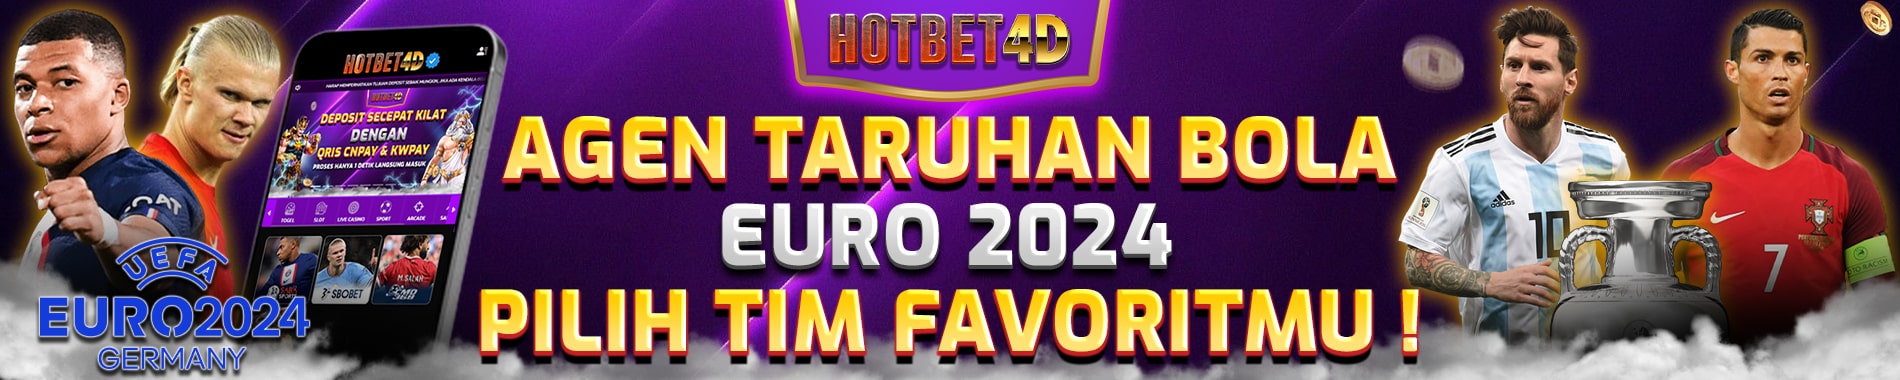 Hotbet4d | Taruhan Bola Euro 2024